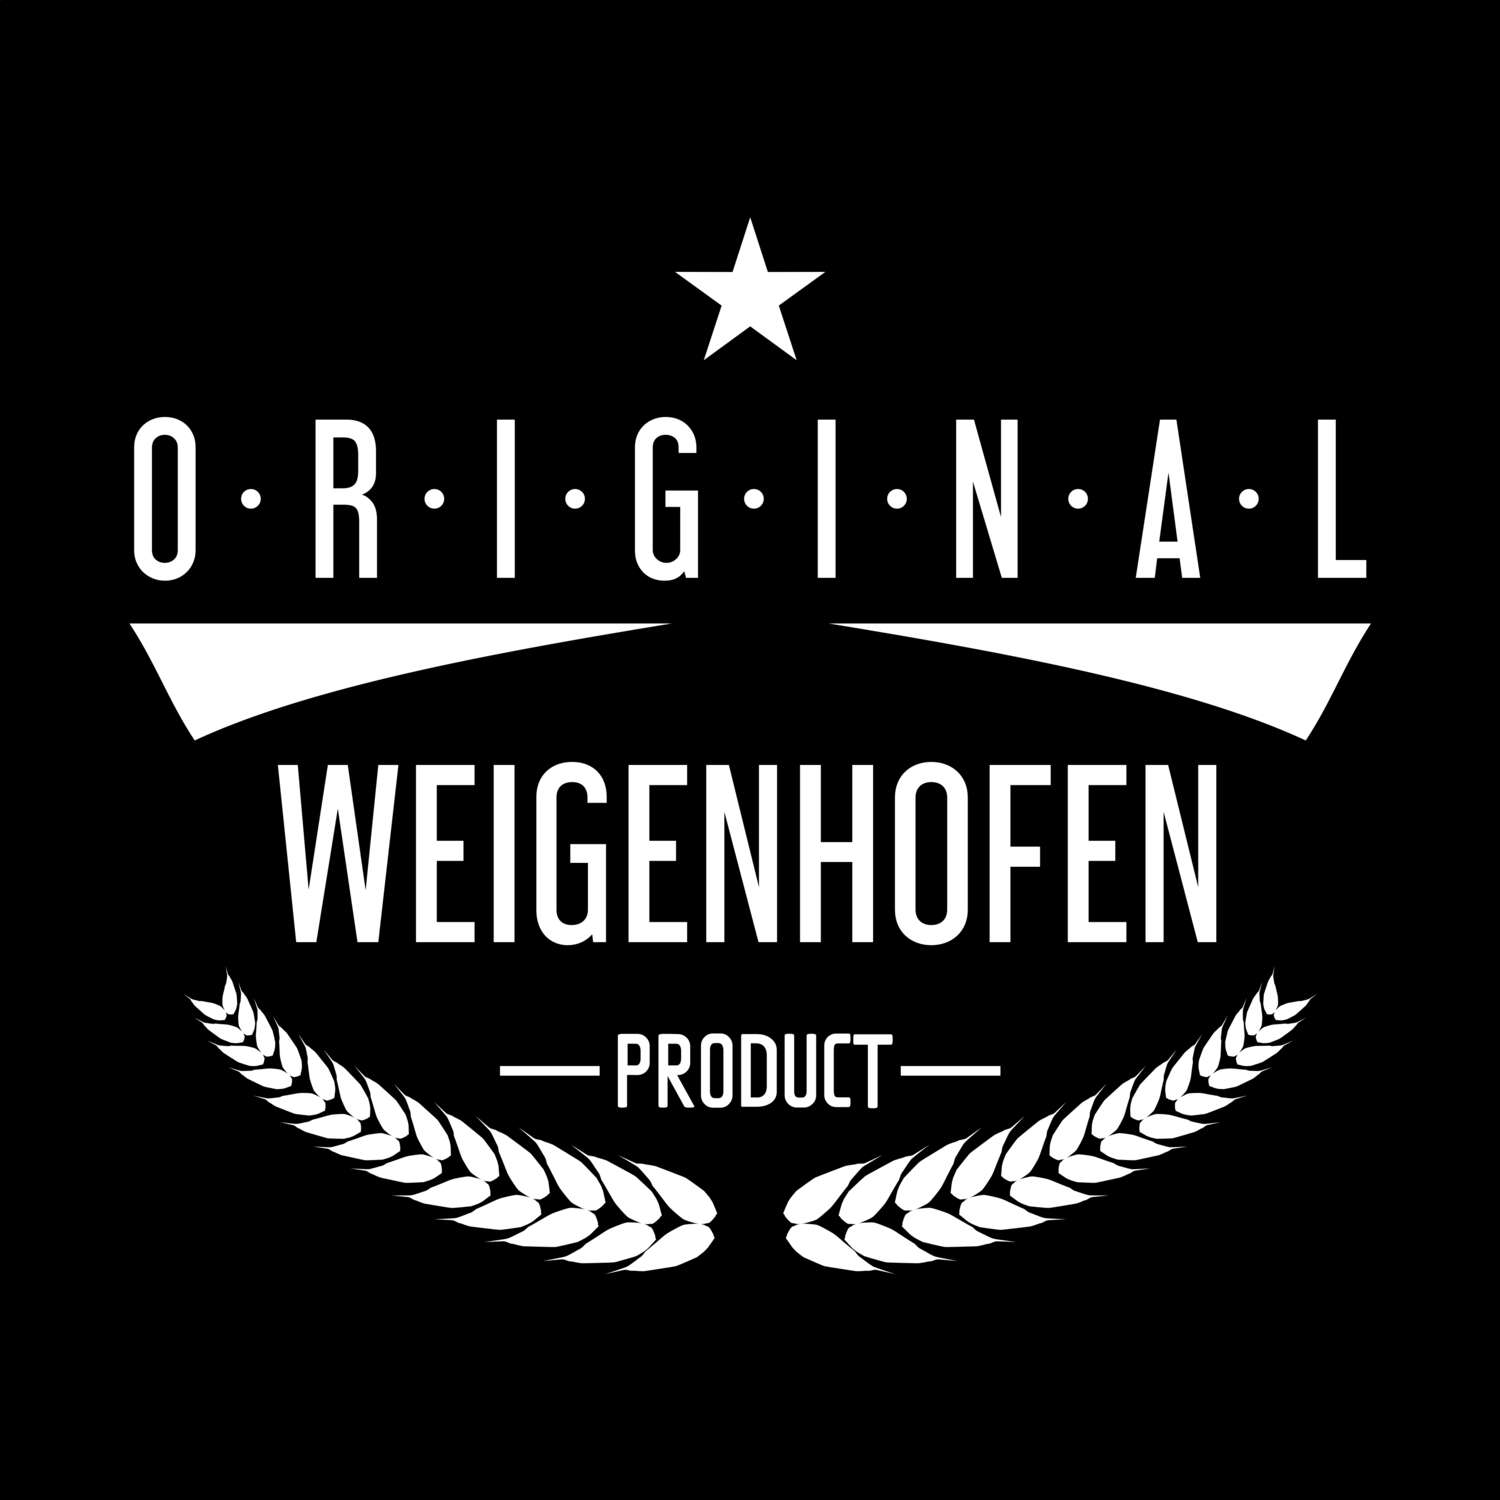 Weigenhofen T-Shirt »Original Product«